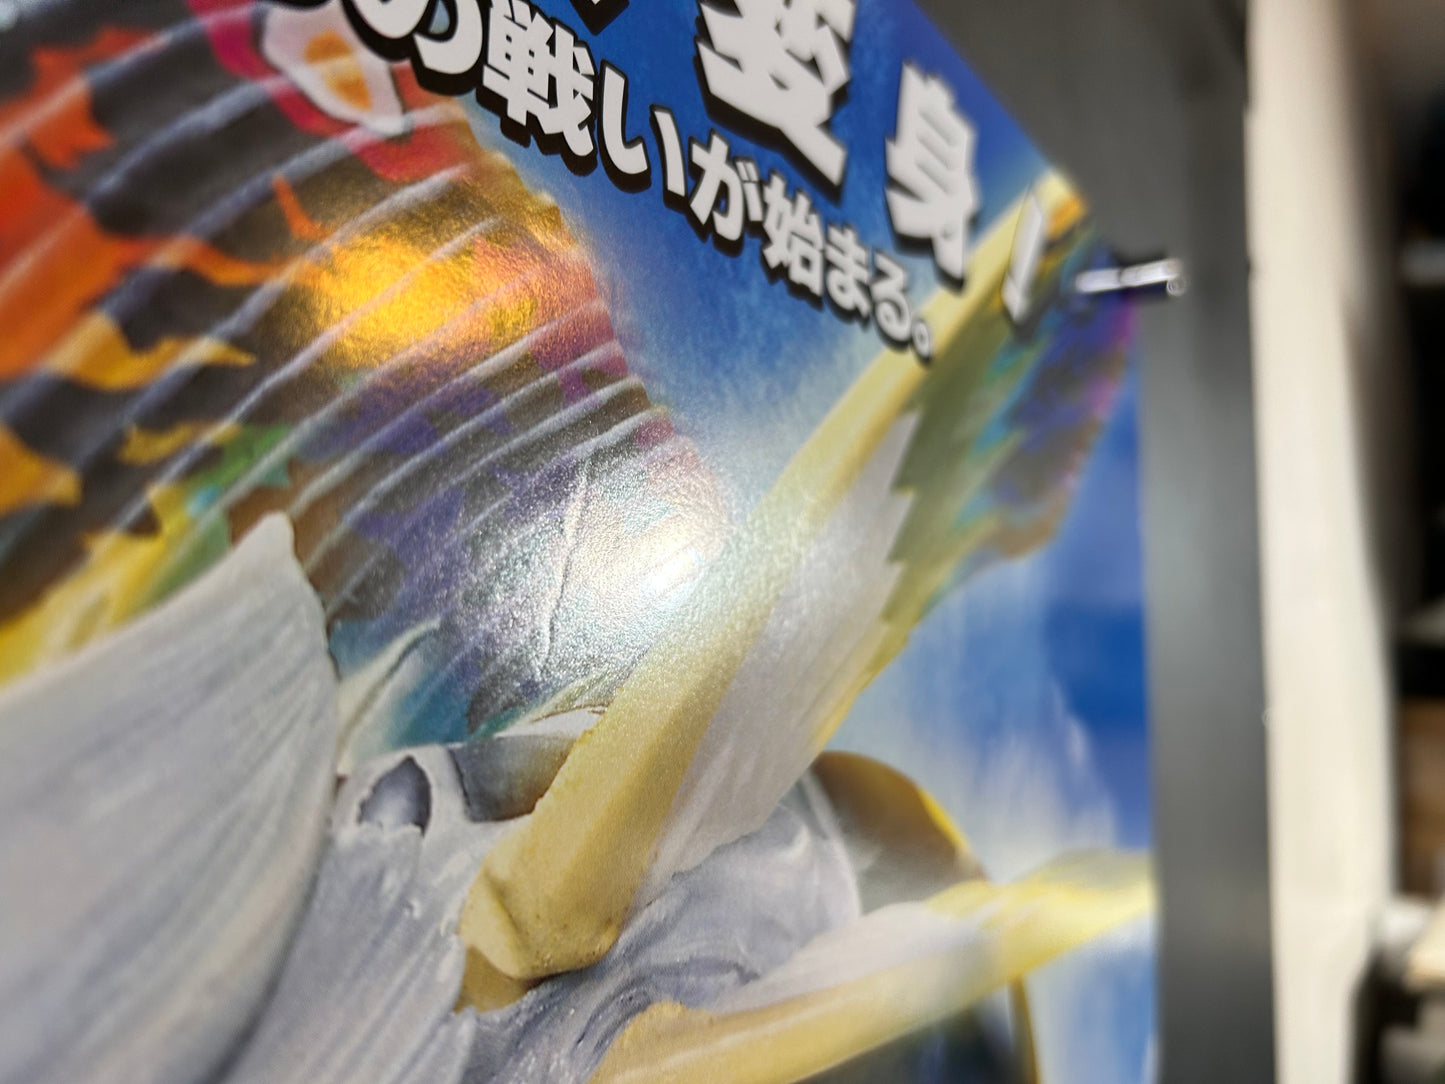 Mothra Original Japanese B2 Poster 1996